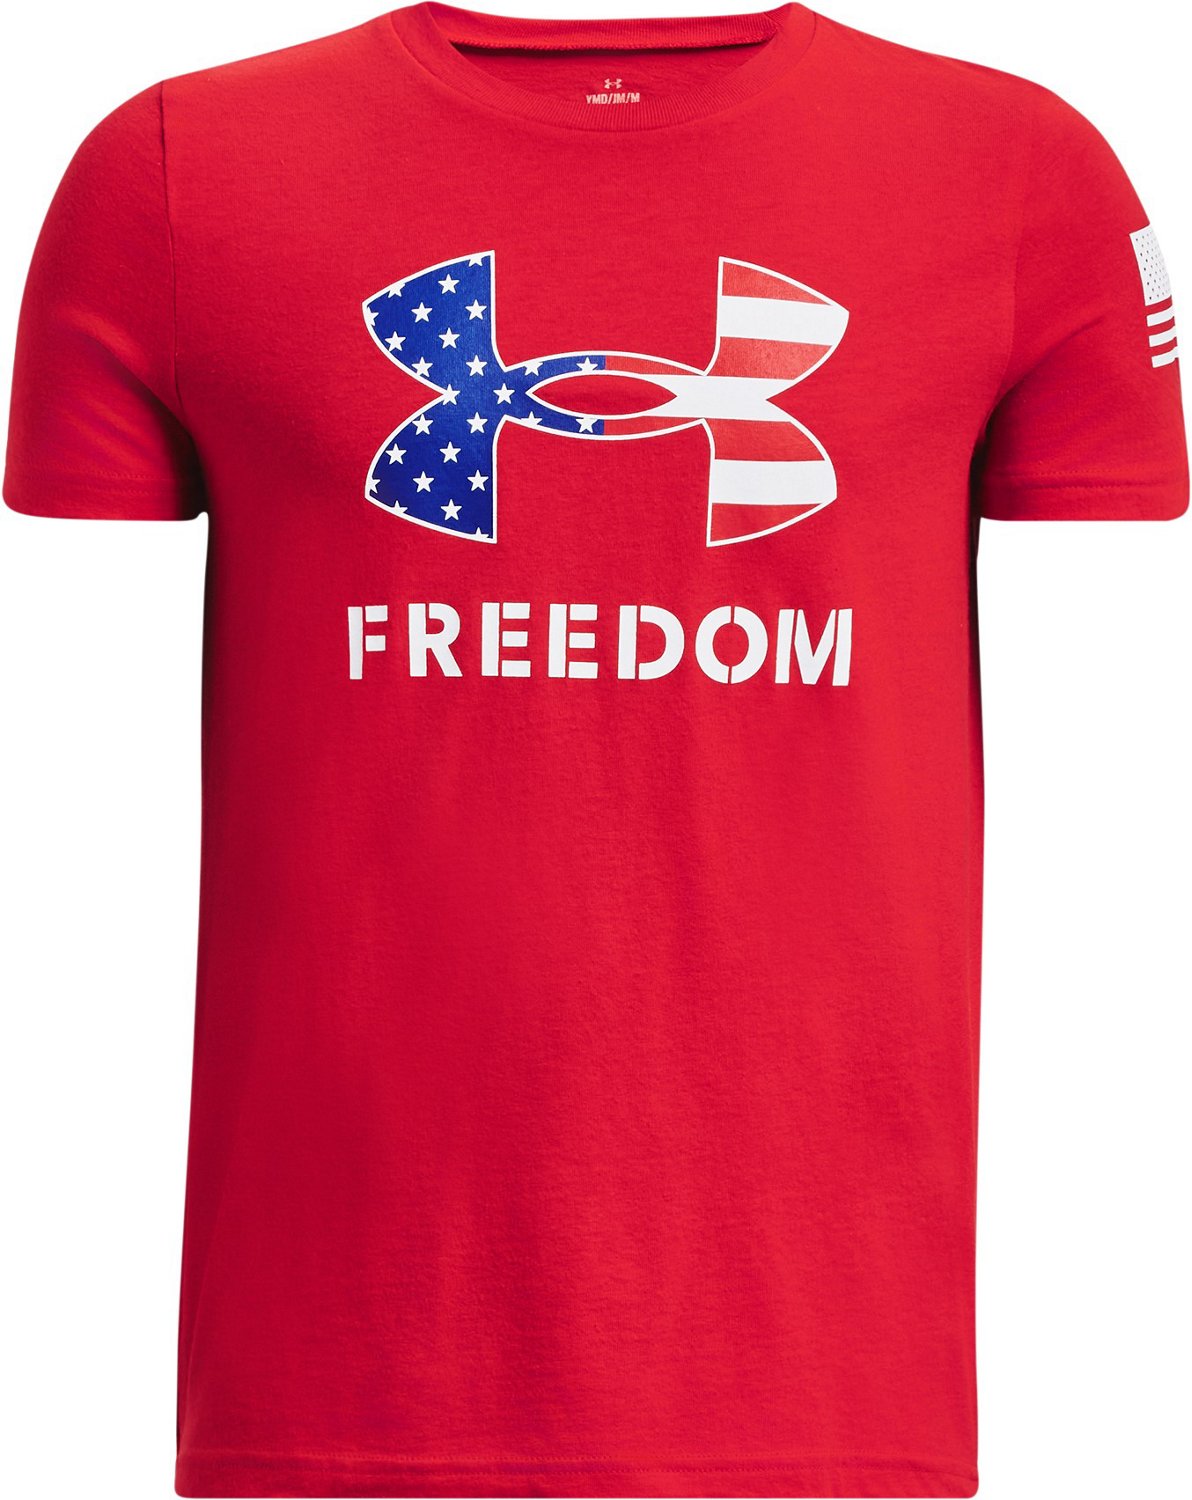 Заказать Спортивная одежда Футболка Freedom PTH Under Armour, цвет - cерый,  по цене 3 300 рублей на маркетплейсе